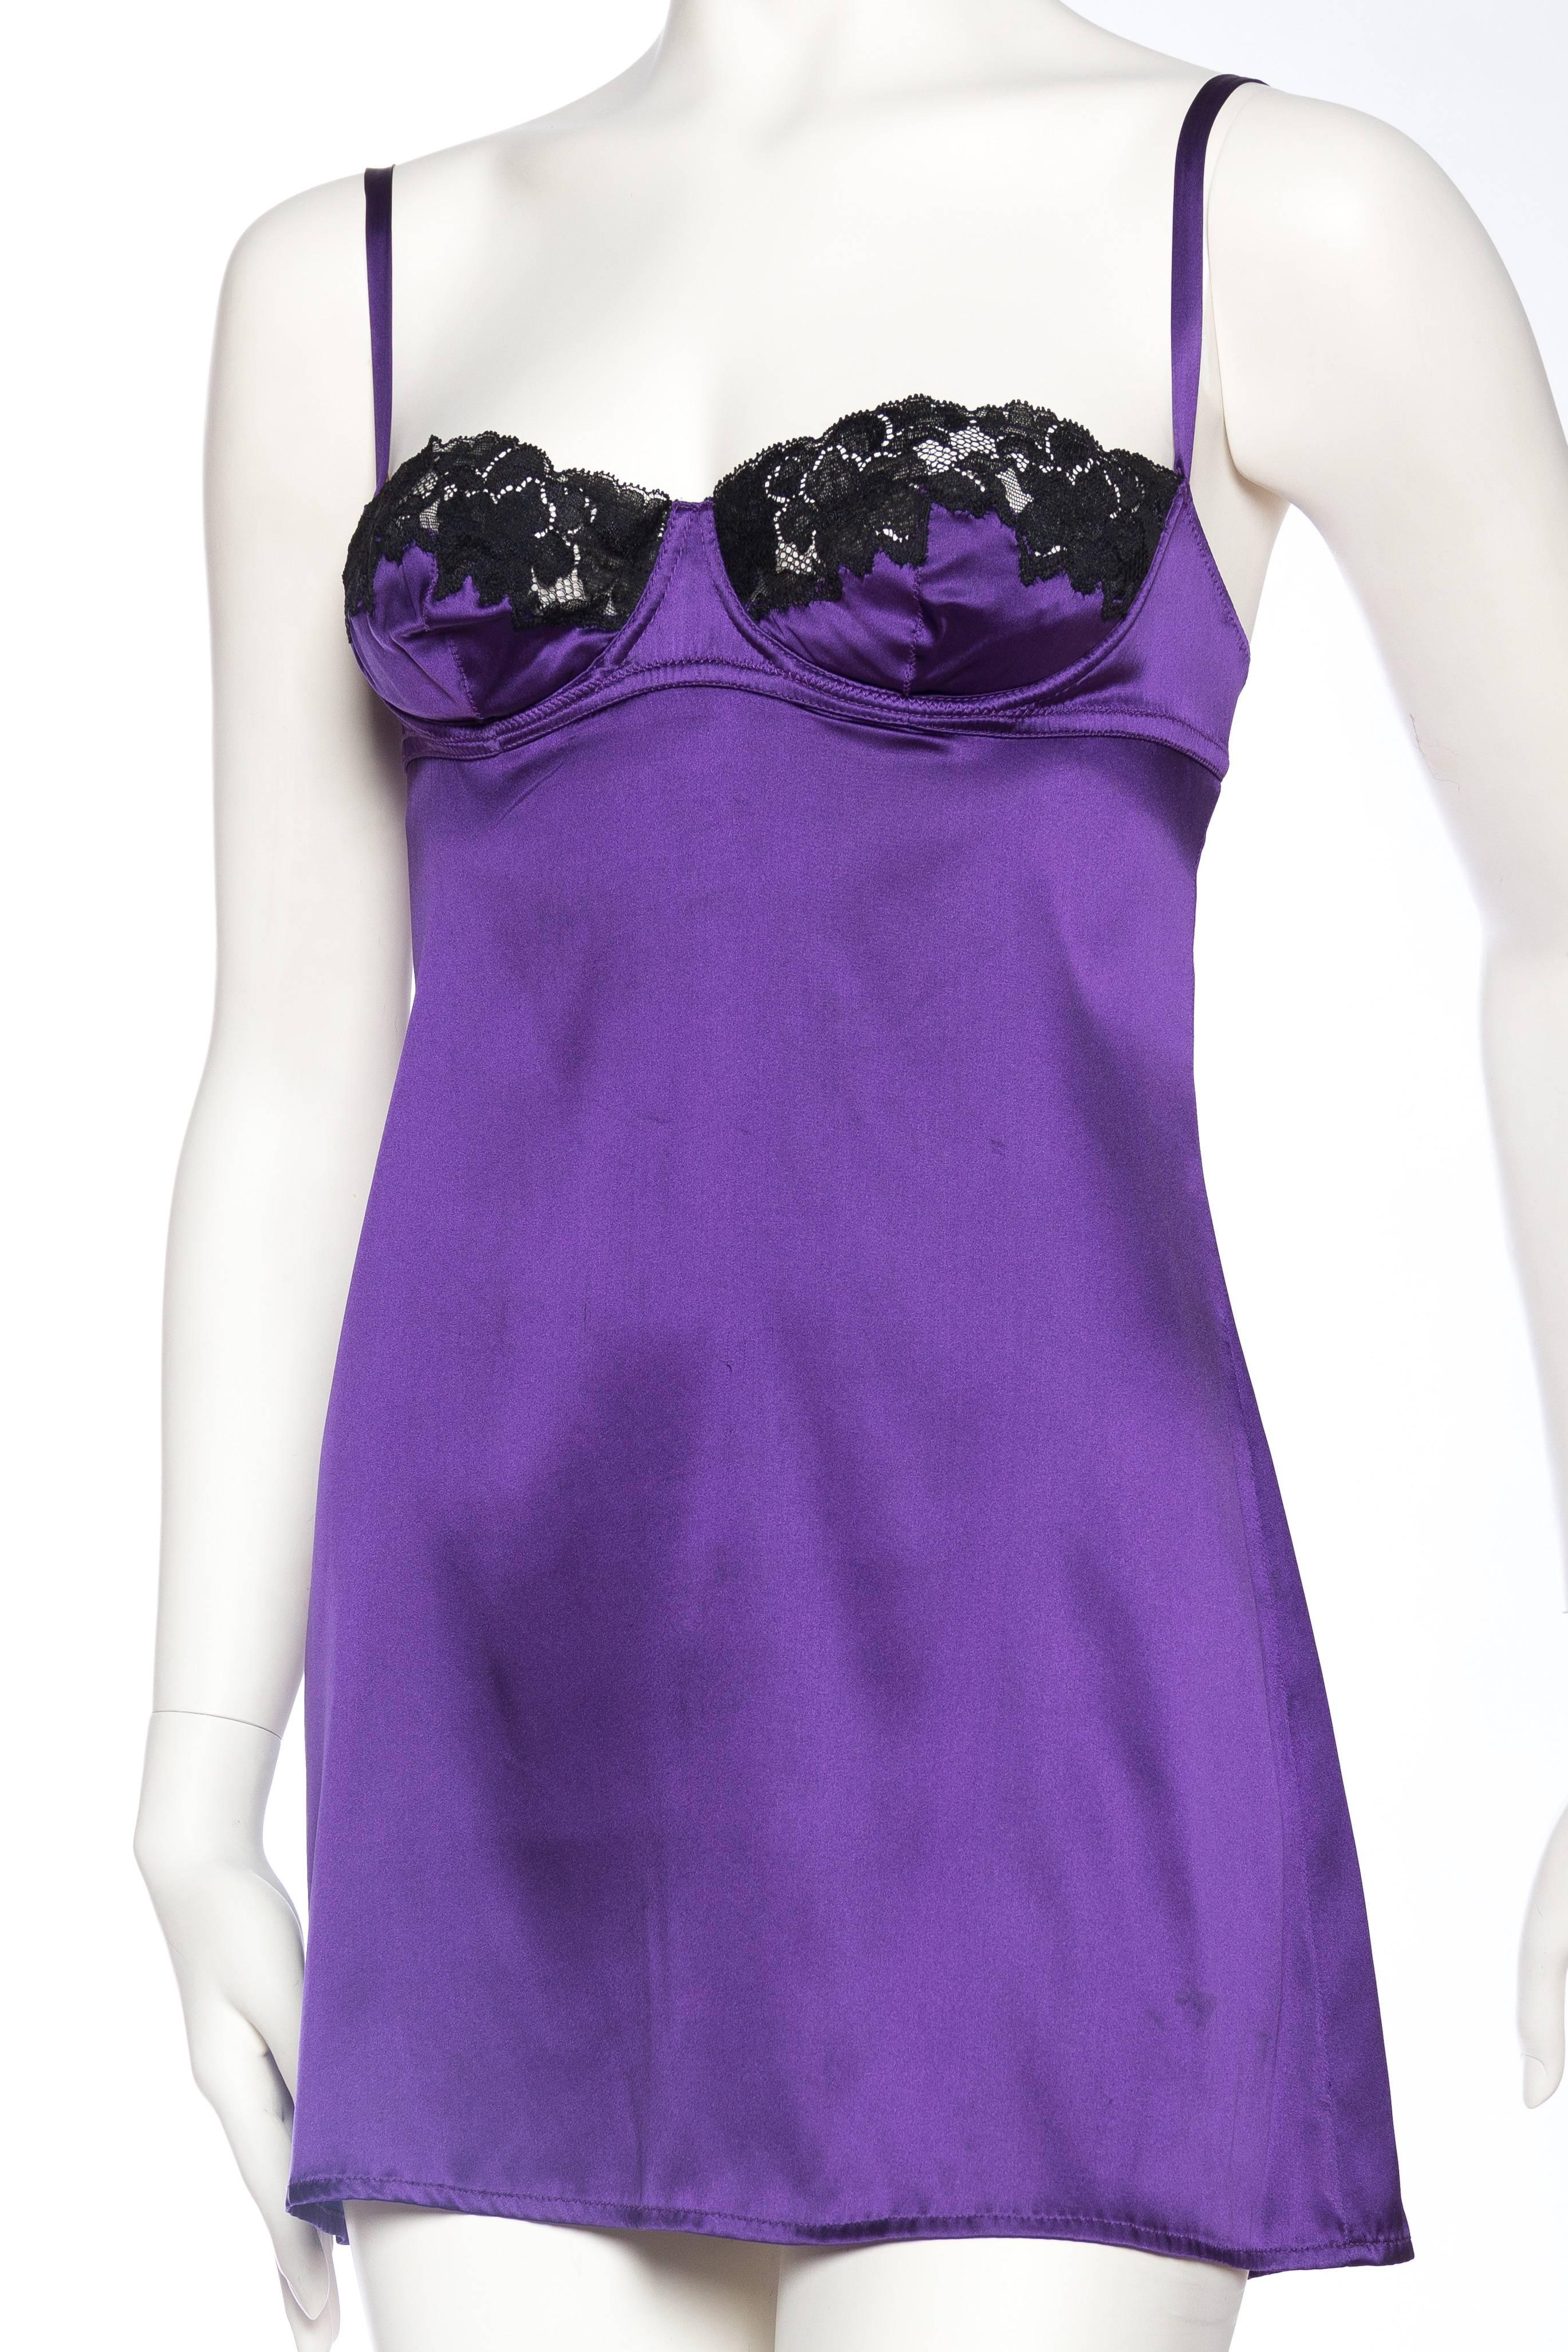 purple lingerie dress